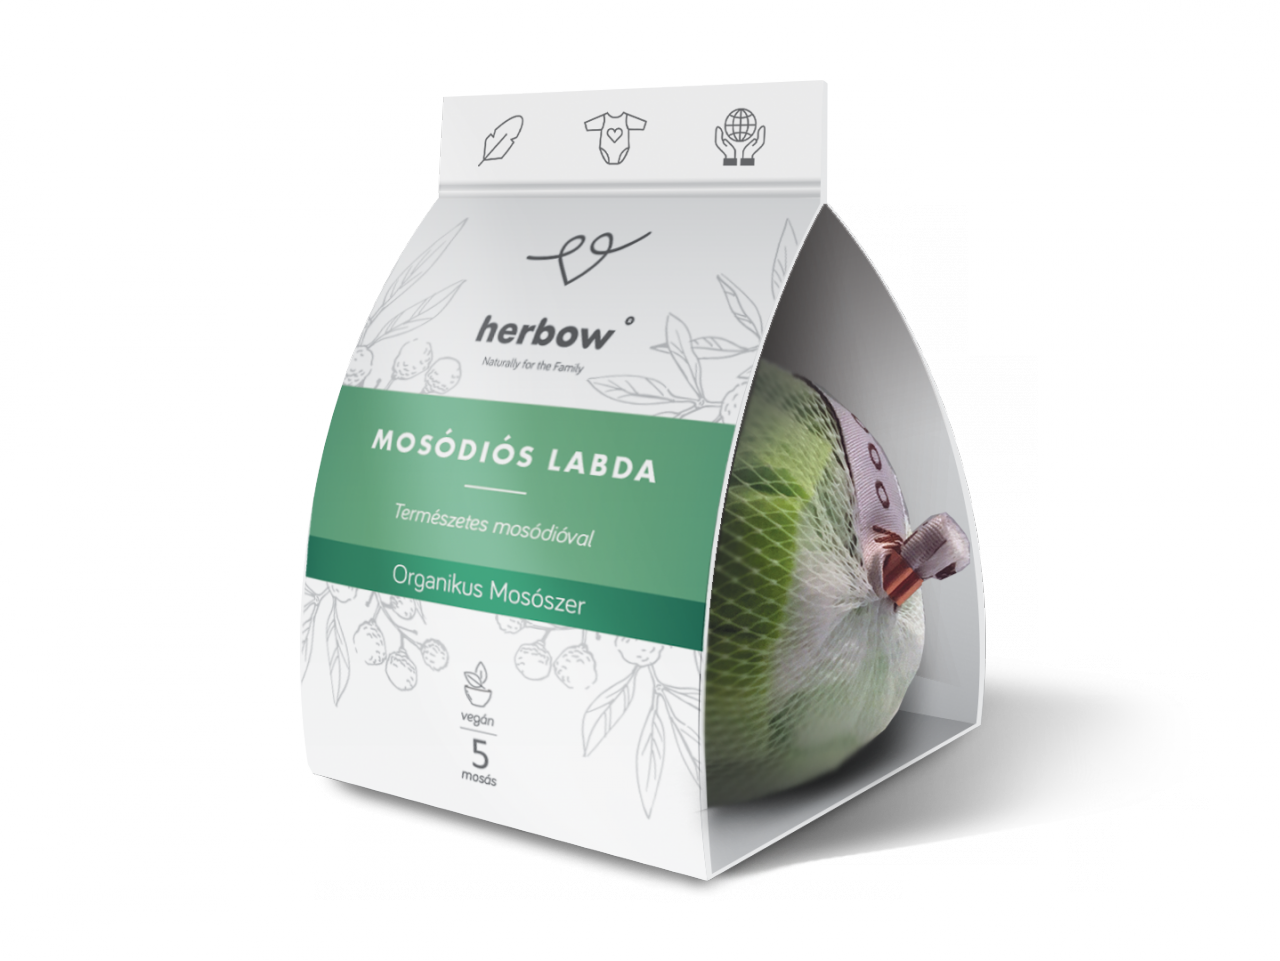 Herbow Mosódiós labda,  1 db/5 mosás